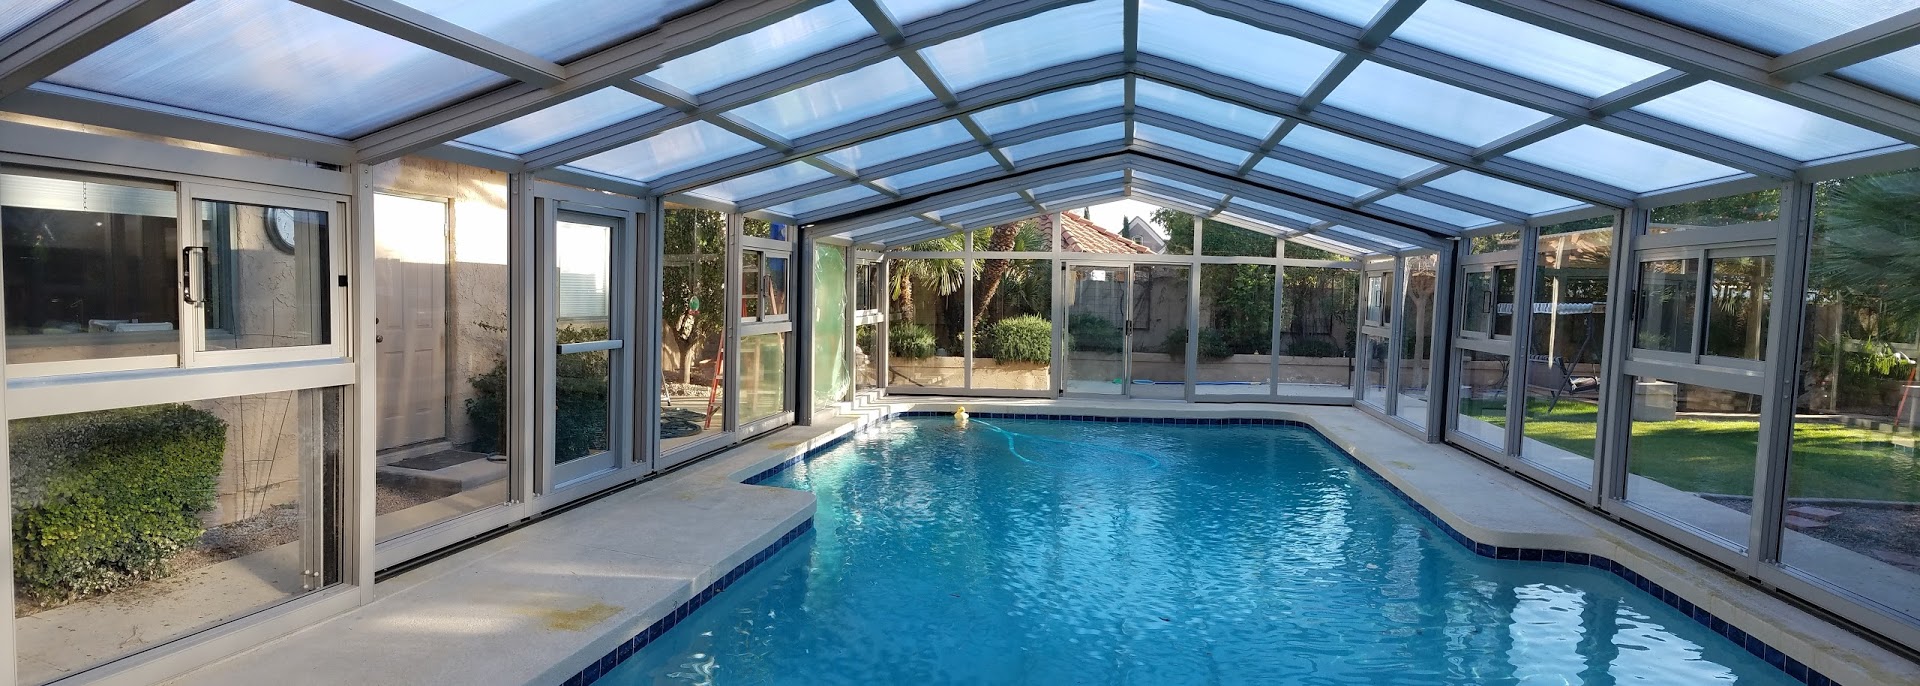 We install retractable pool enclosure in the Phoenix valley